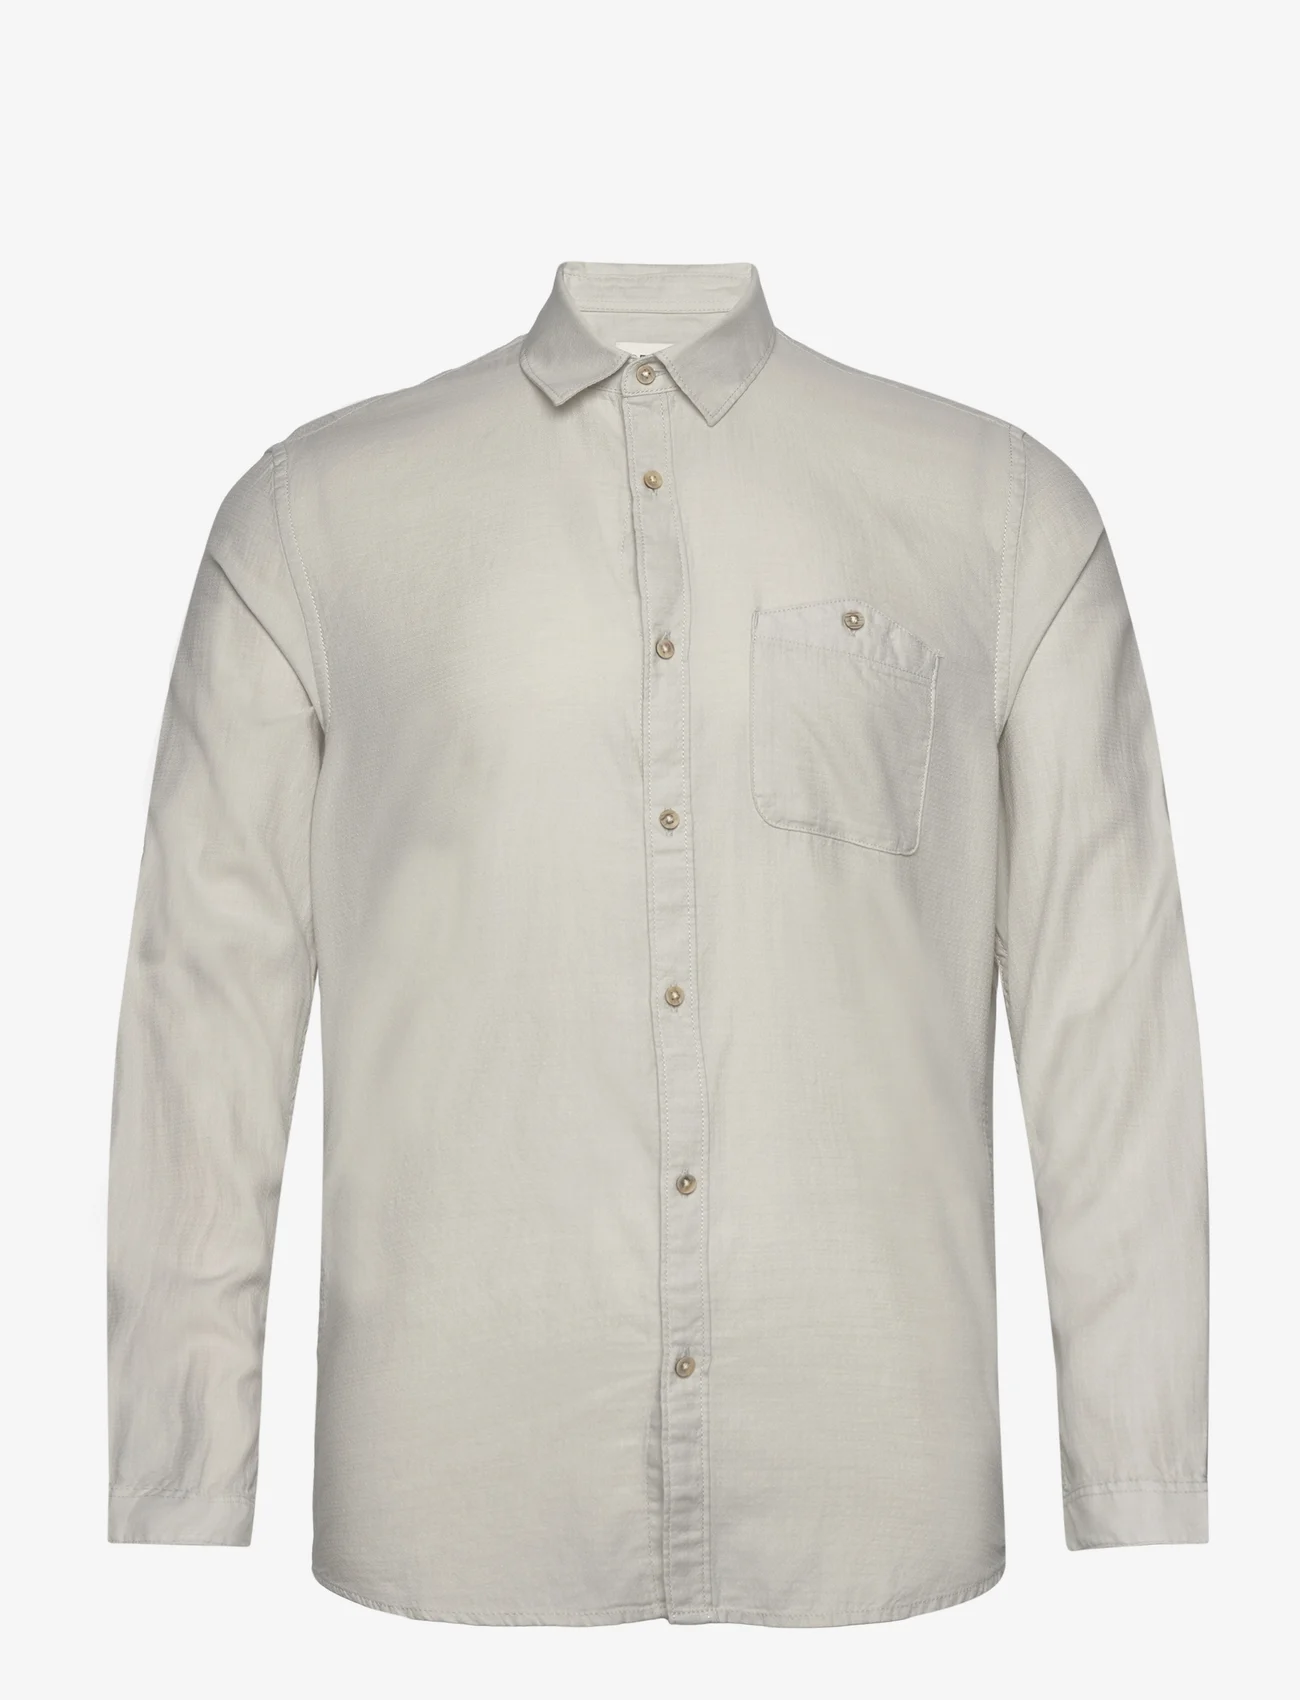 Tom Tailor - structured shirt - peruskauluspaidat - grey off white structure - 0